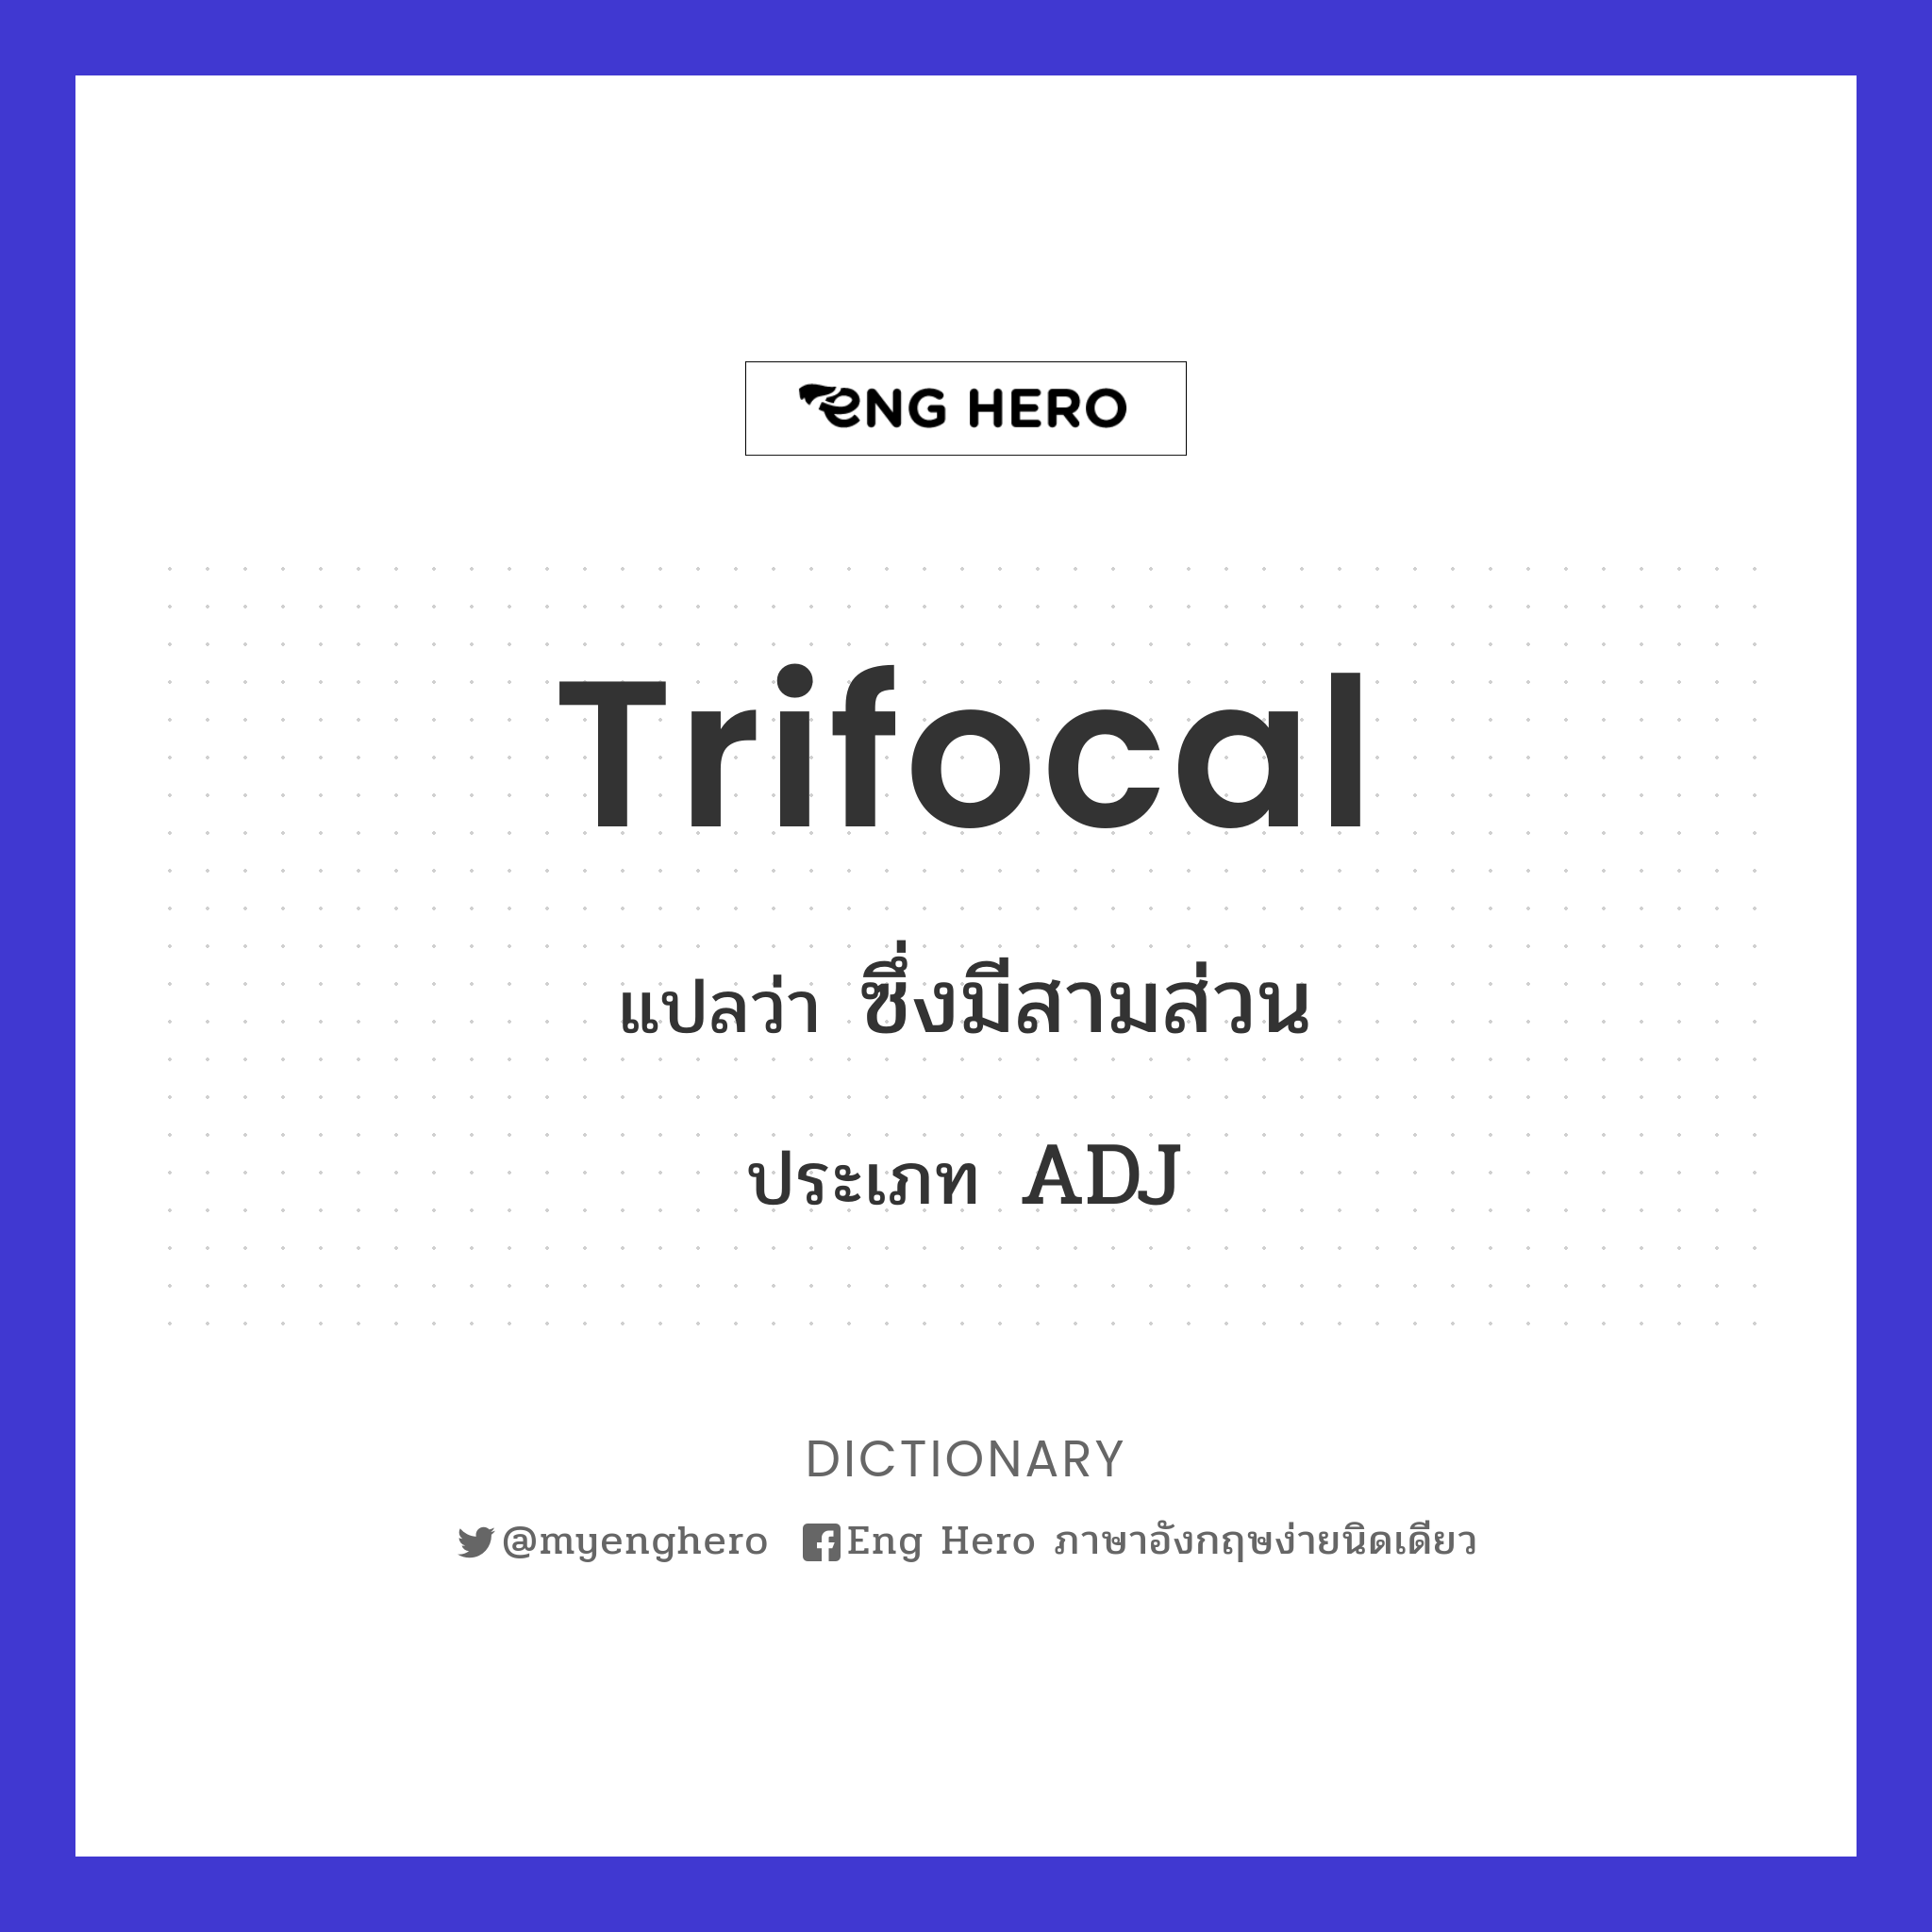 trifocal